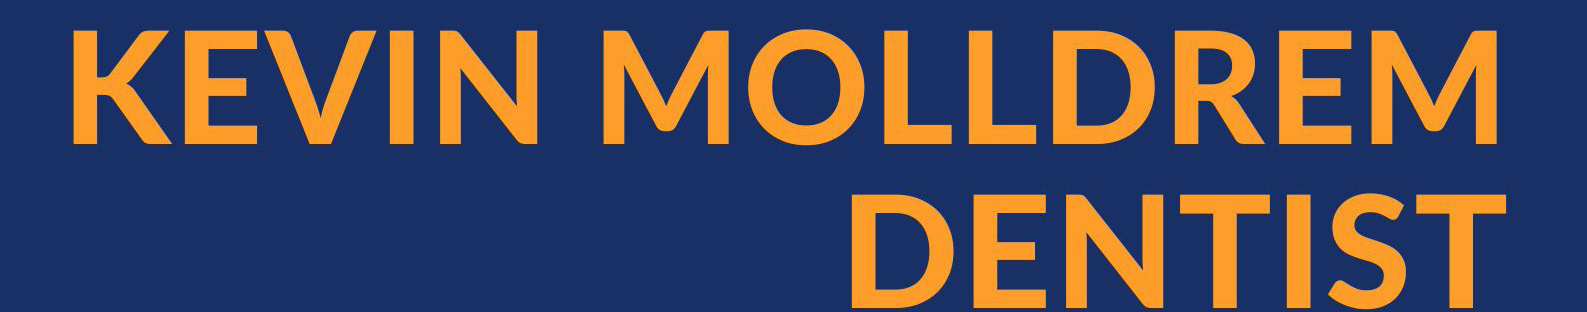 Kevin Molldrem Dentist- Molldrem Family Dentistry's profile banner